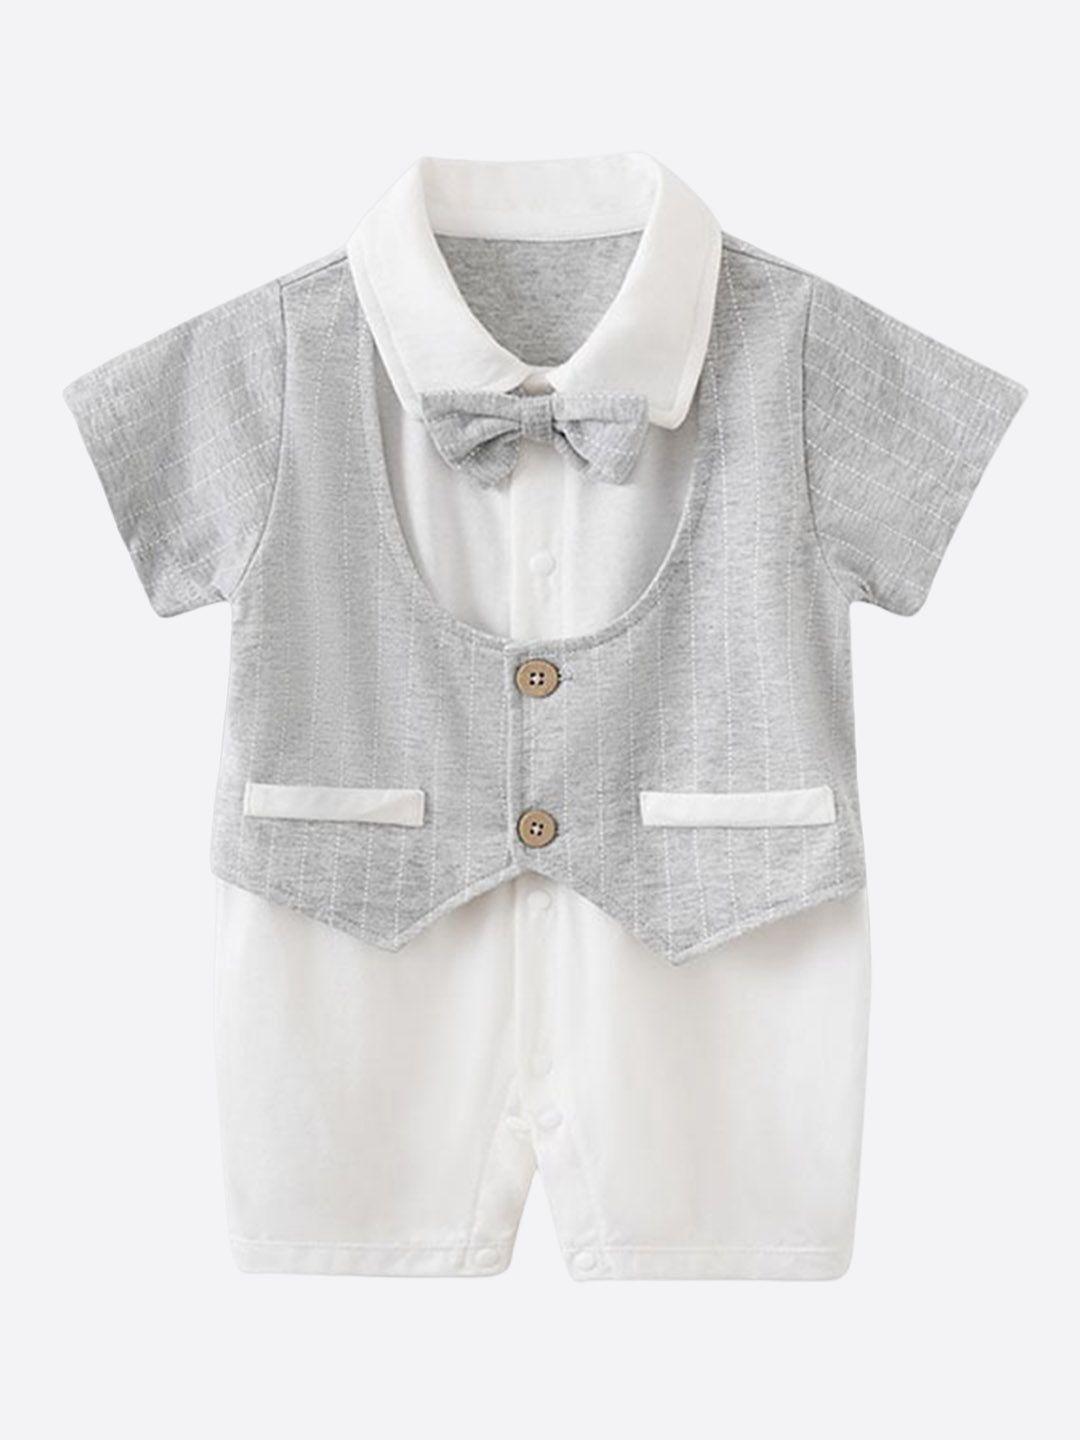 stylecast-grey-infant-boys-striped-shirt-collar-short-sleeves-cotton-romper